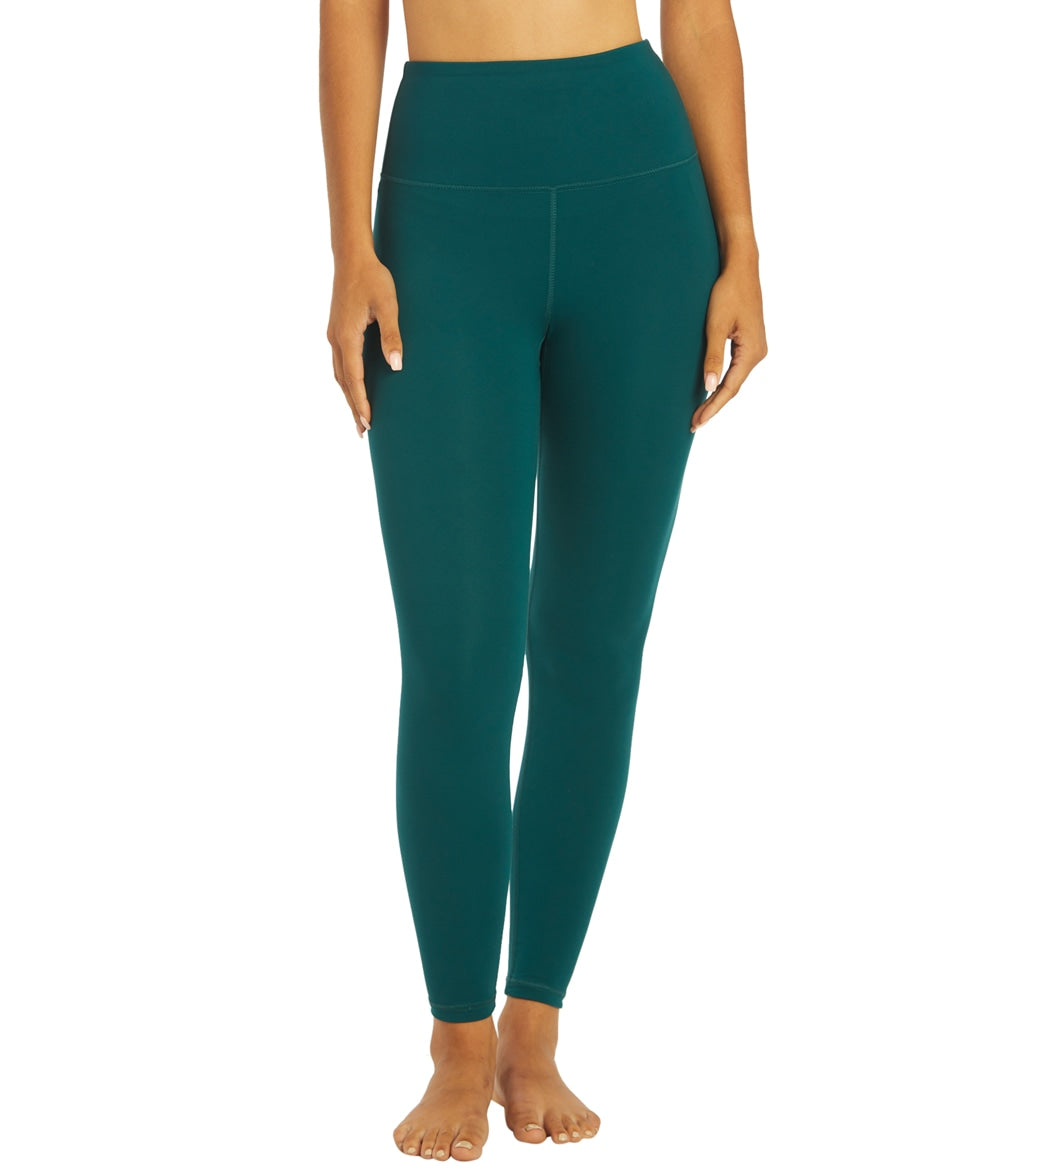 Zella live in leggiings reviews: Shop popular leggings on sale